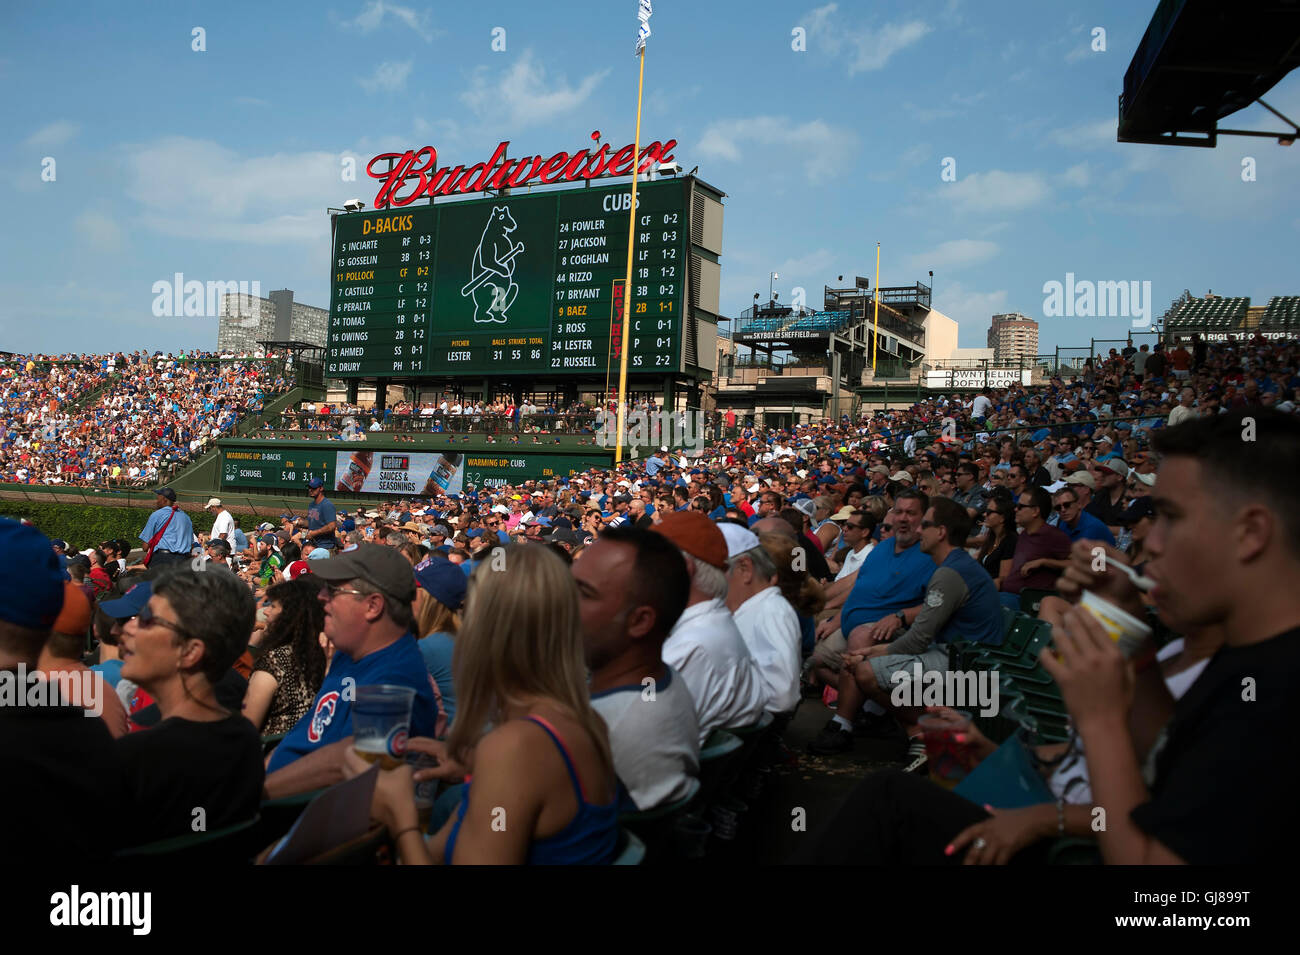 Wrigley Field, stade de baseball des Chicago Cubs v Chicago, Illinois, USA, Amérique du Nord Banque D'Images